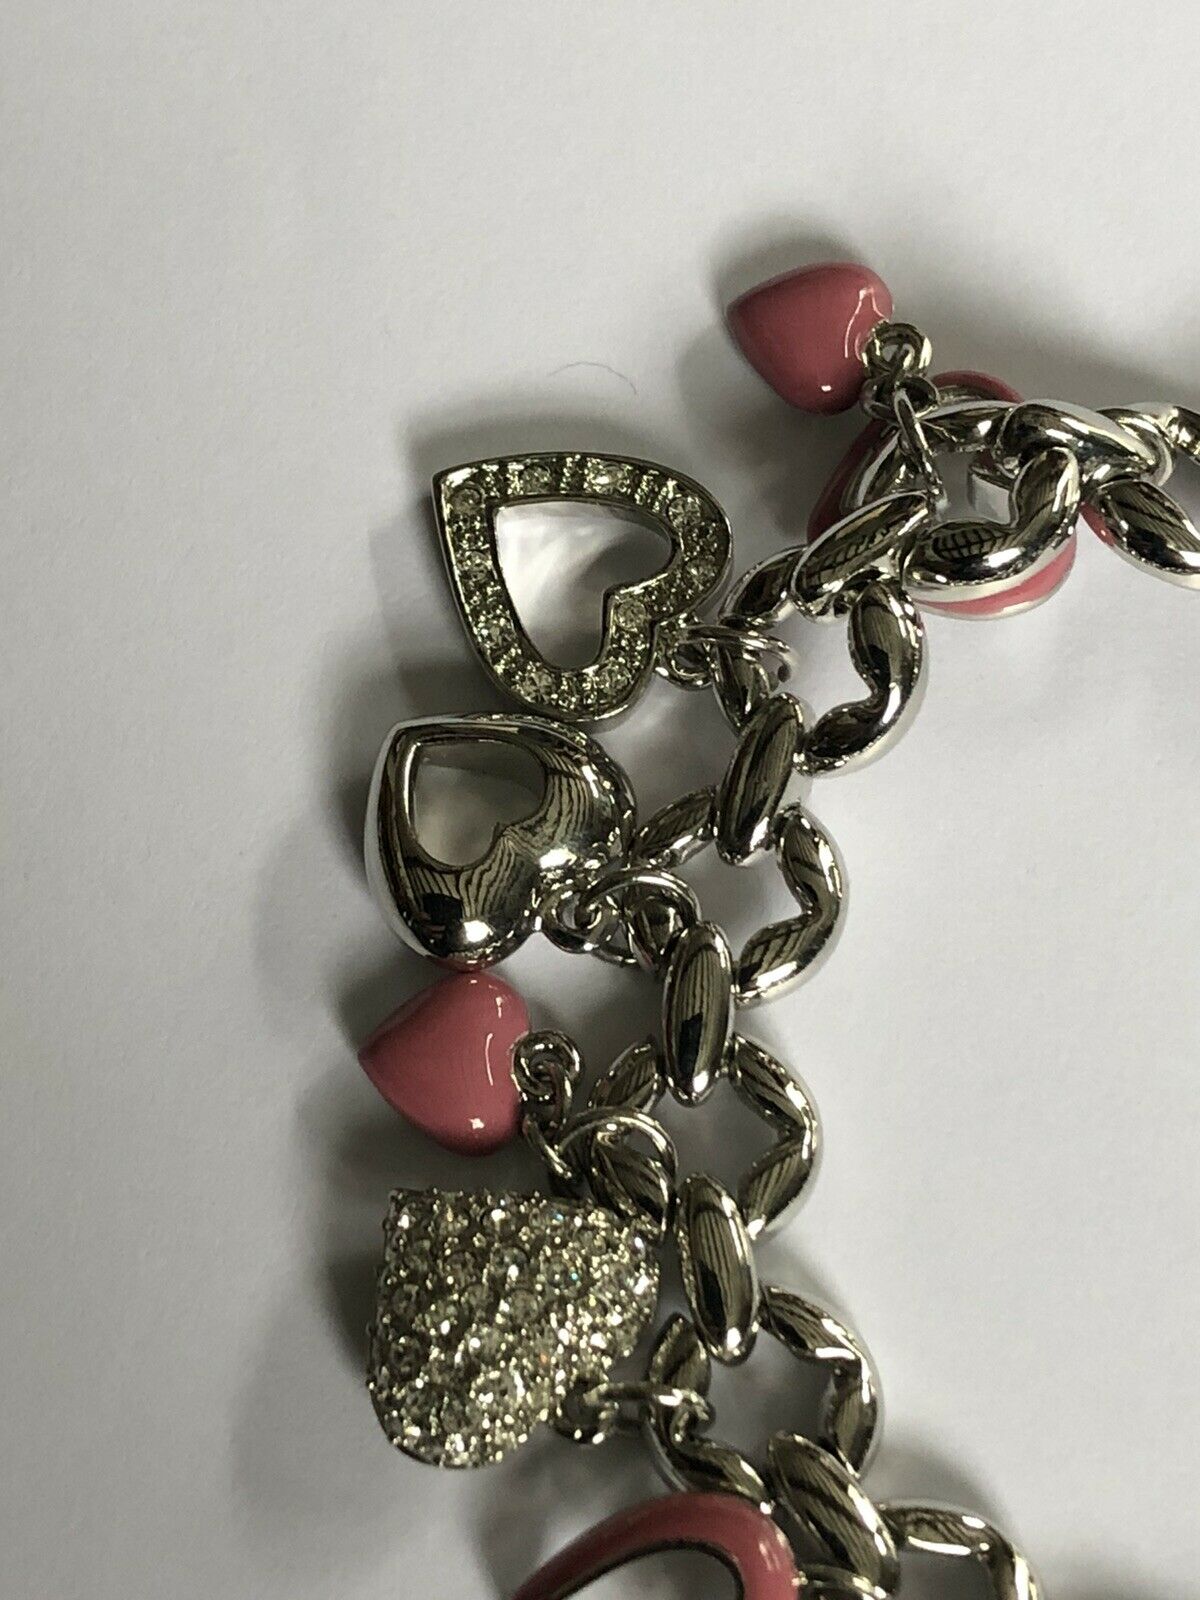 Vintage 1980s Rhodium Plated Pink Enamel Swarovski Crystal Charm Bracelet